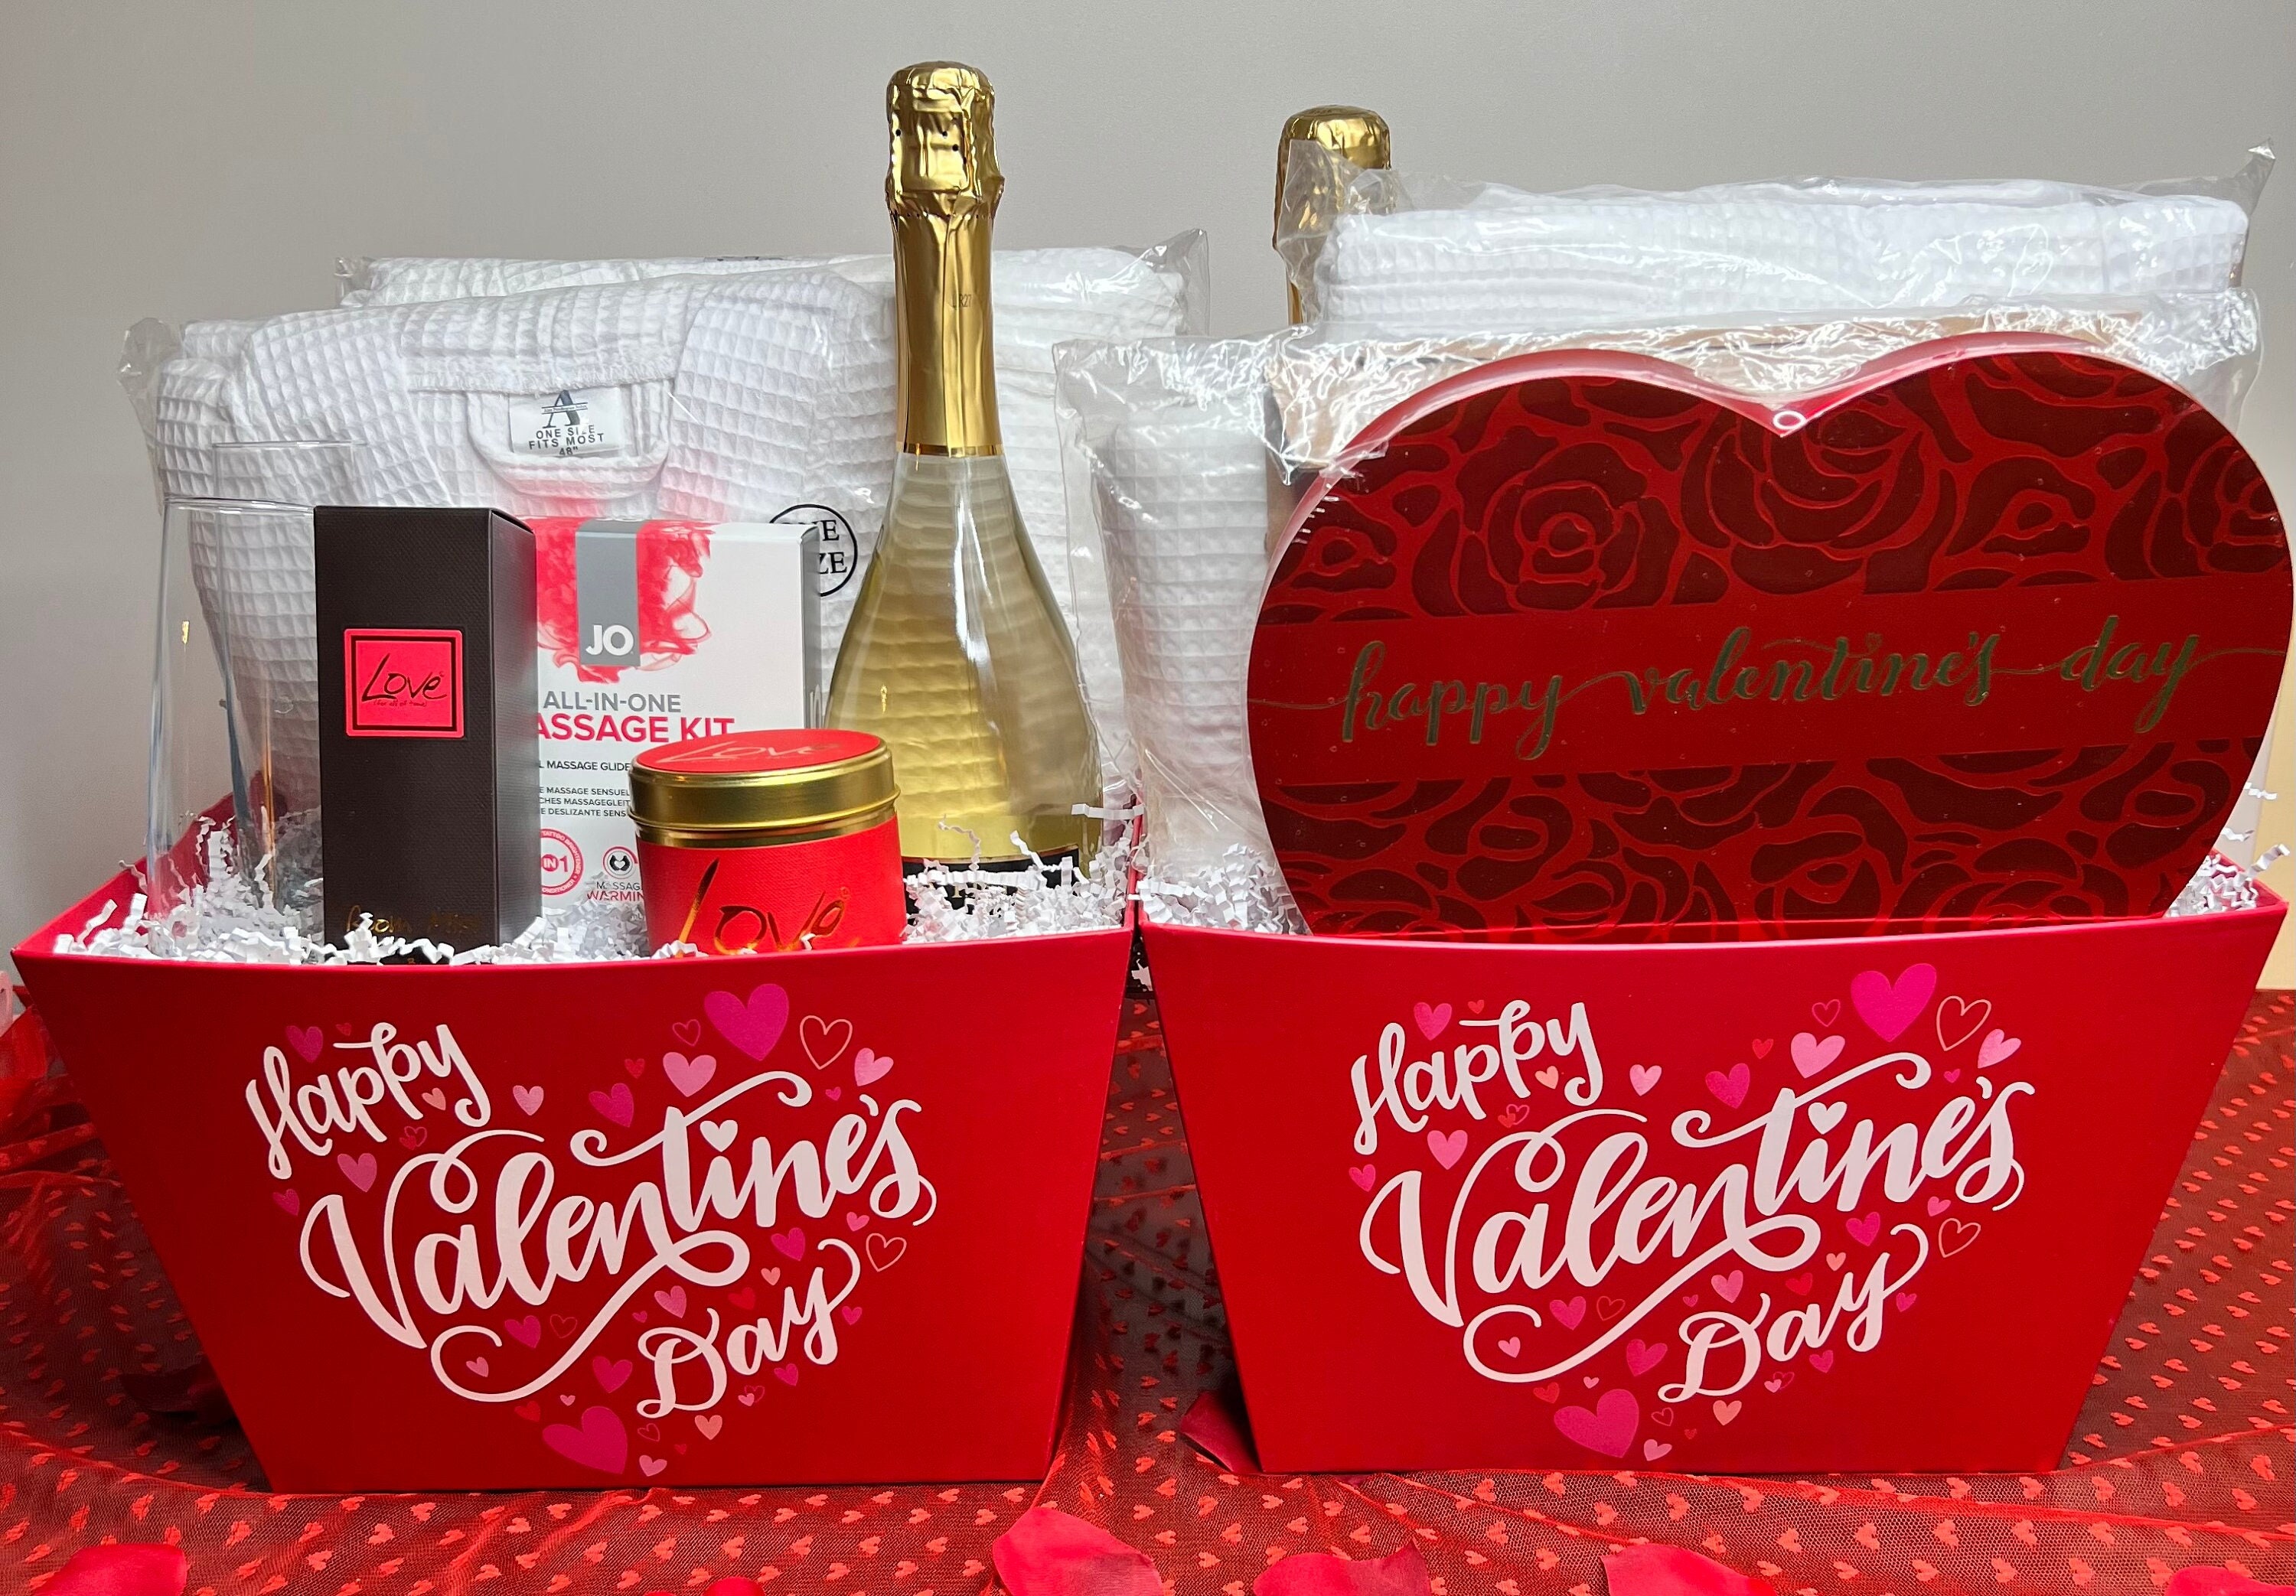 Valentines Day Gift Box, Valentines Day Care Package, Valentine Gift Basket